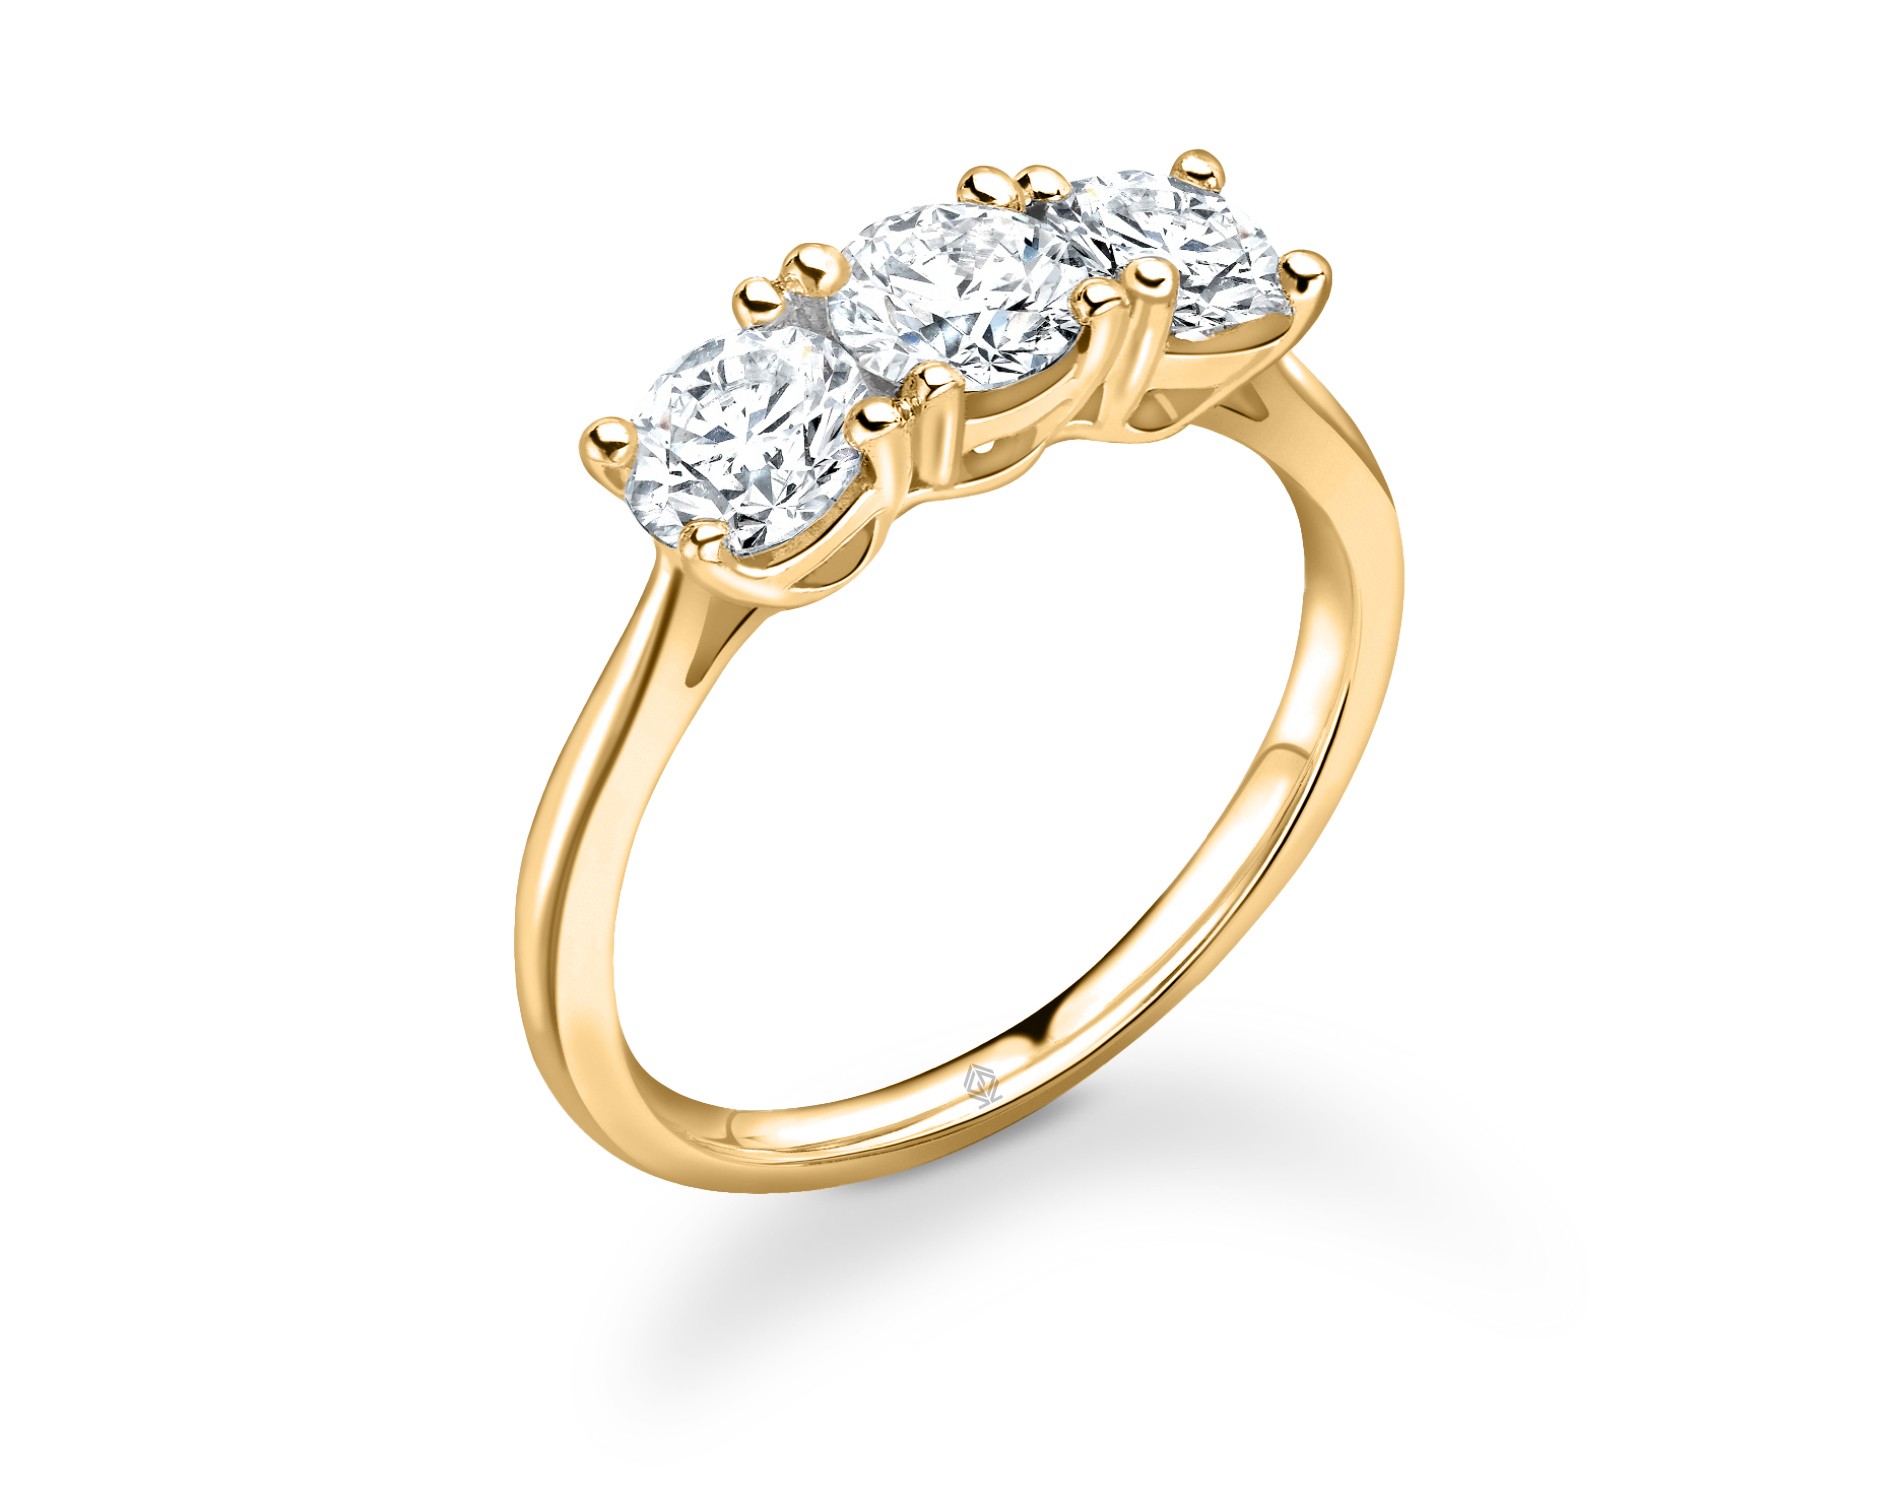 18K YELLOW GOLD ROUND CUT TRILOGY DIAMOND ENGAGEMENT RING